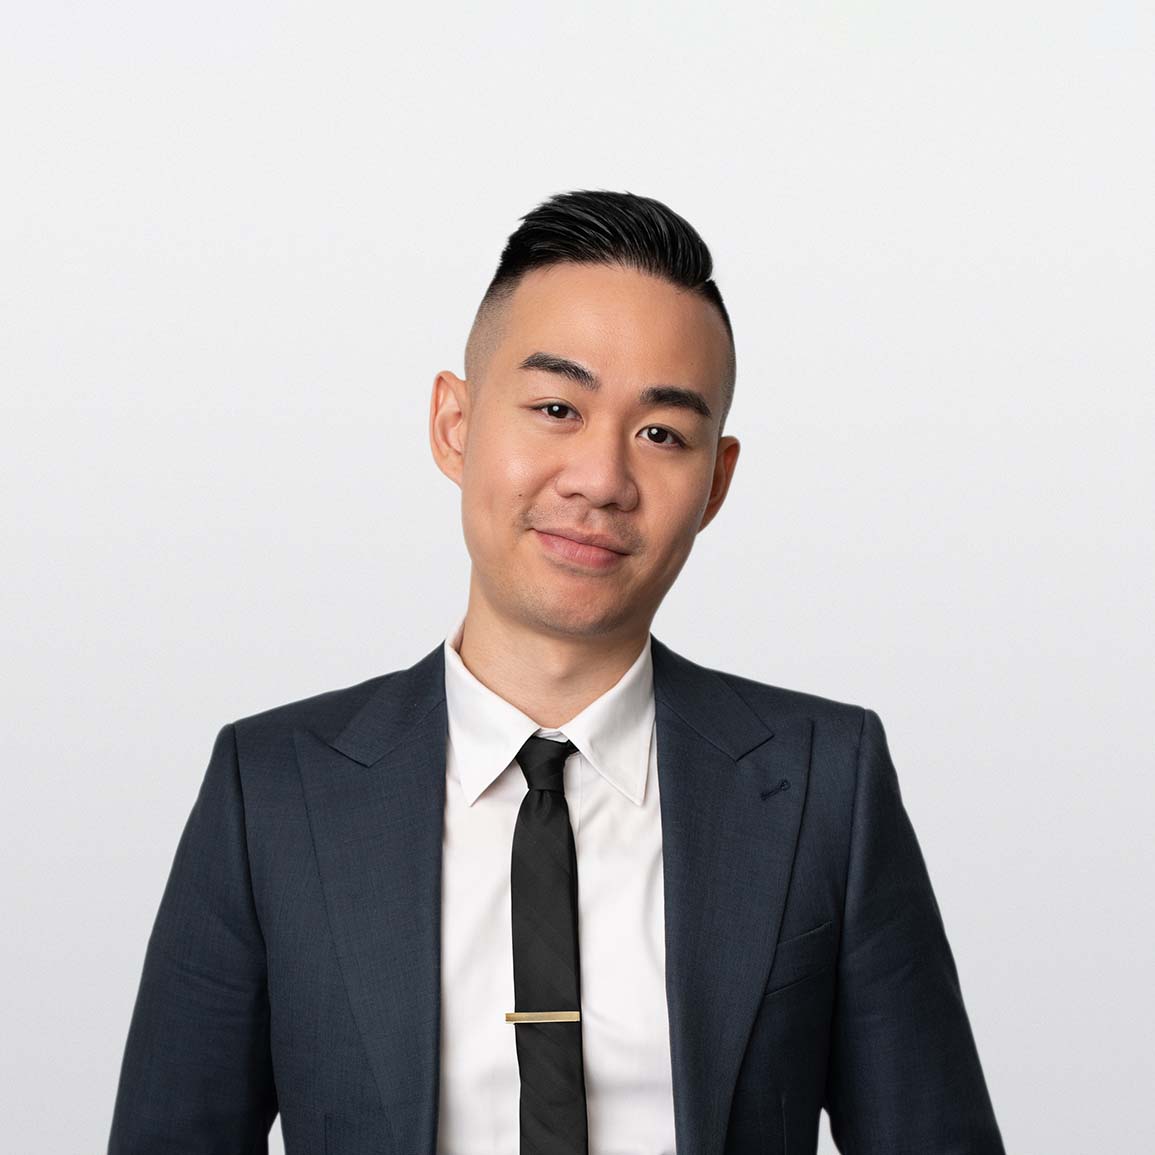 Image of Kelvin Phung financial advisor on white background